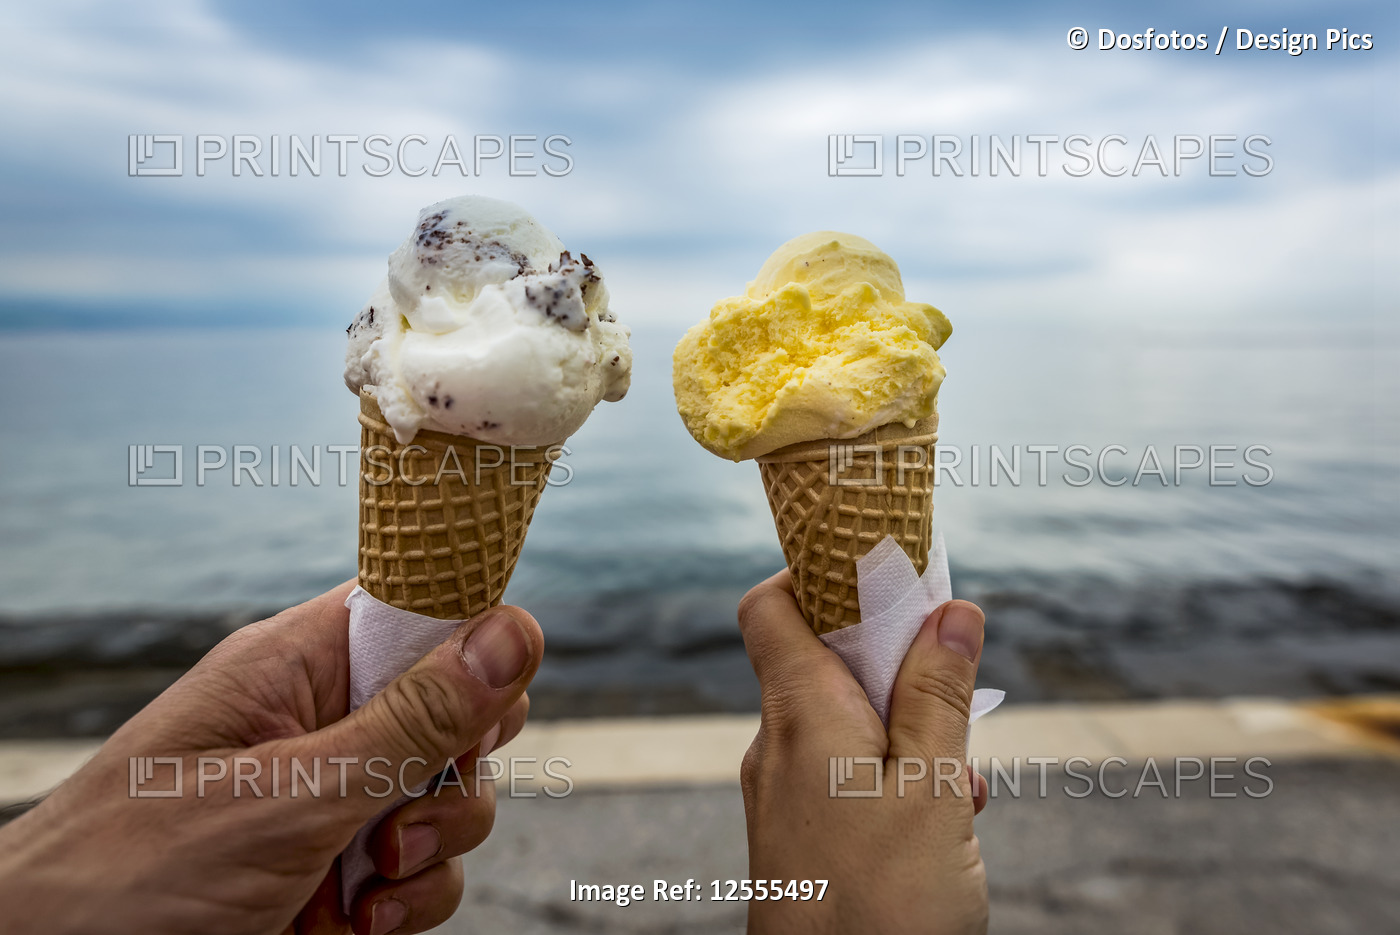 Couple with ice cream cones; Opatija, Primorje-Gorski Kotar County, Croatia